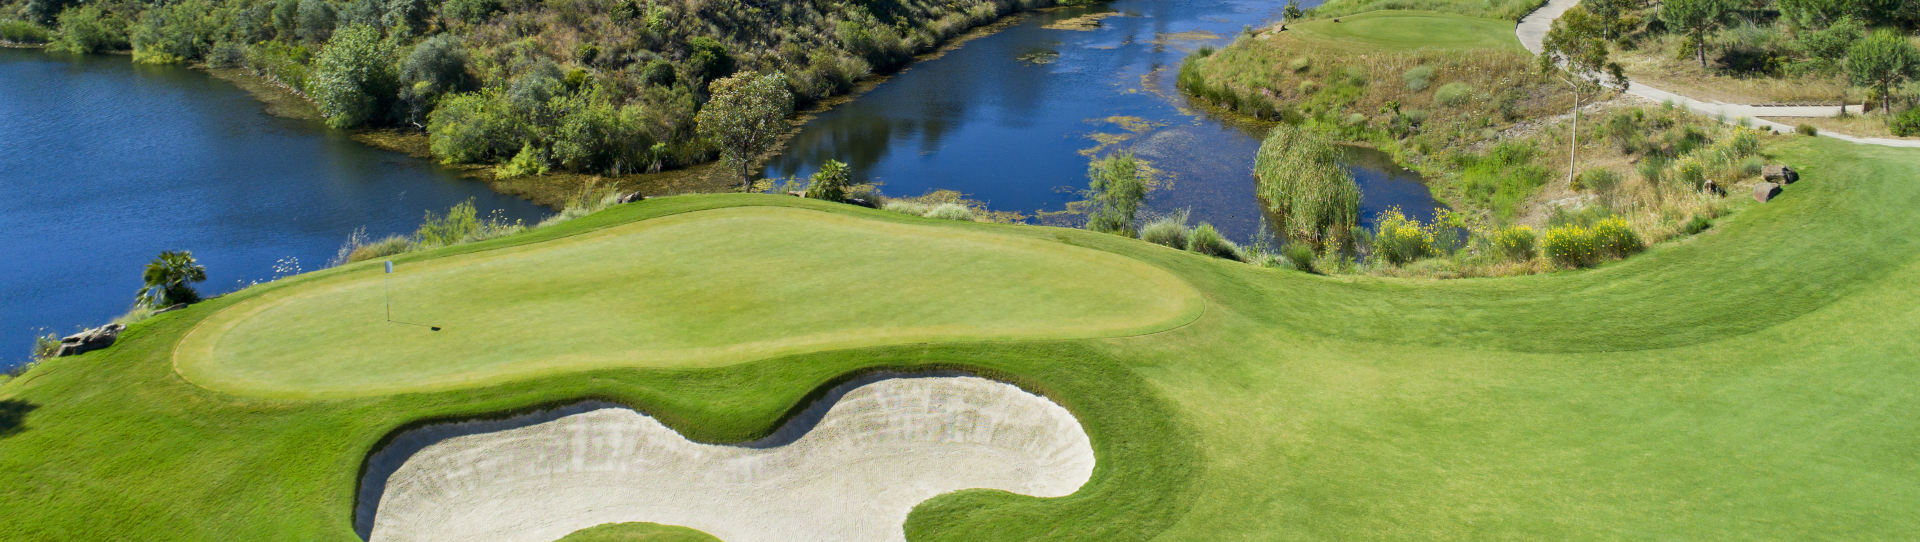 Portugal golf courses - Monte Rei North Golf Course - Photo 1